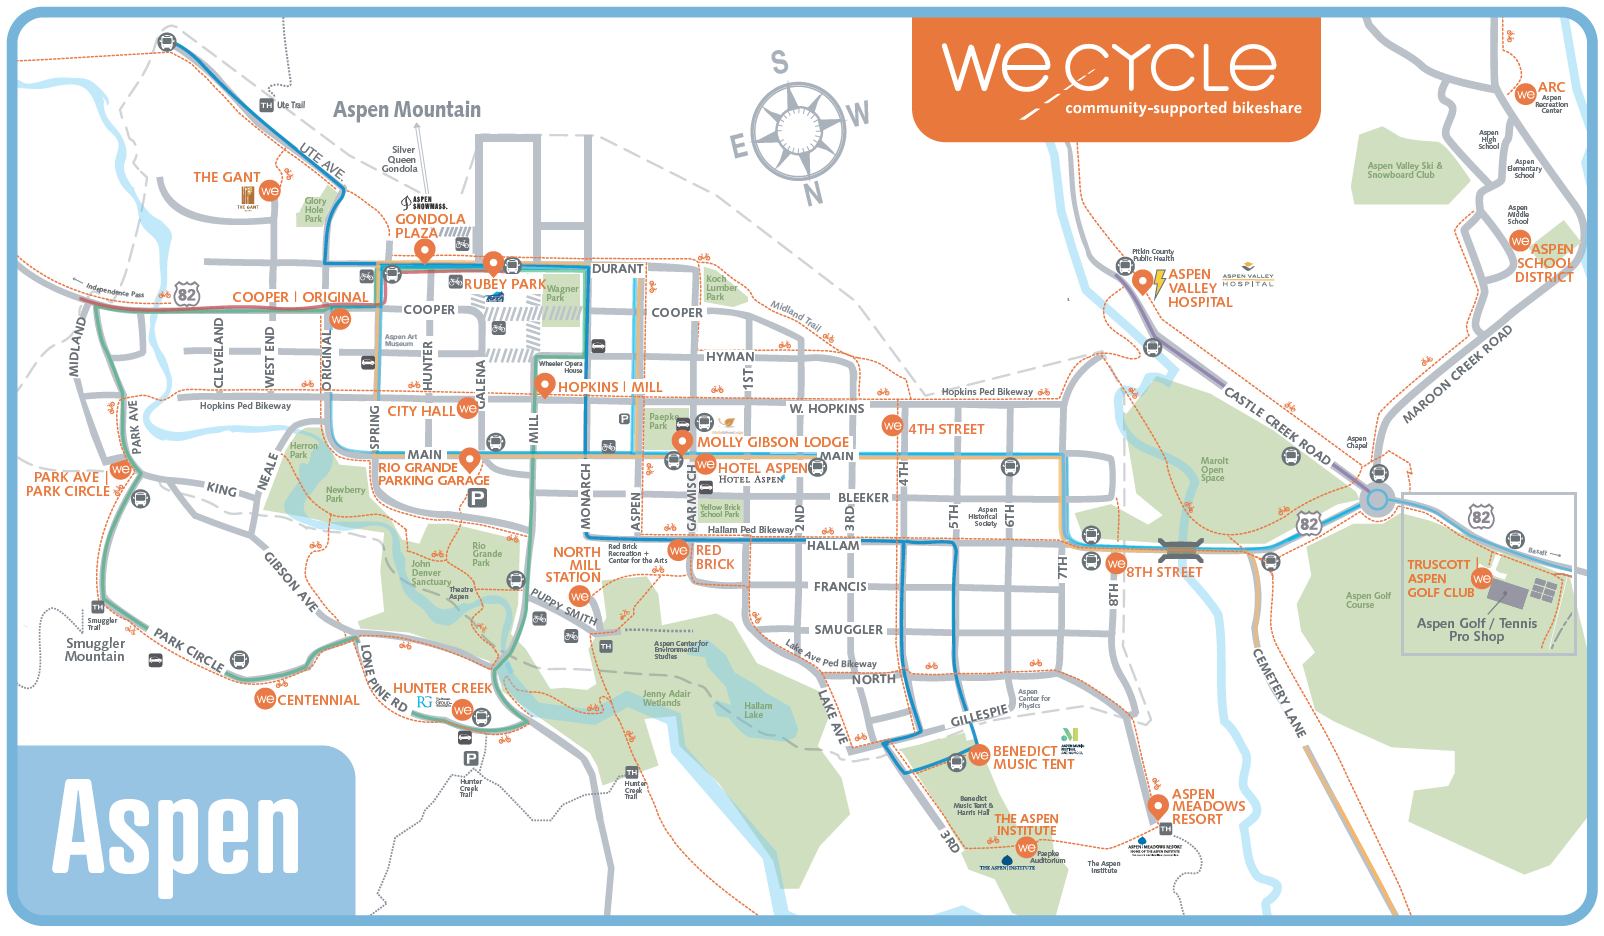 Aspen WE-cycle station map screenshot